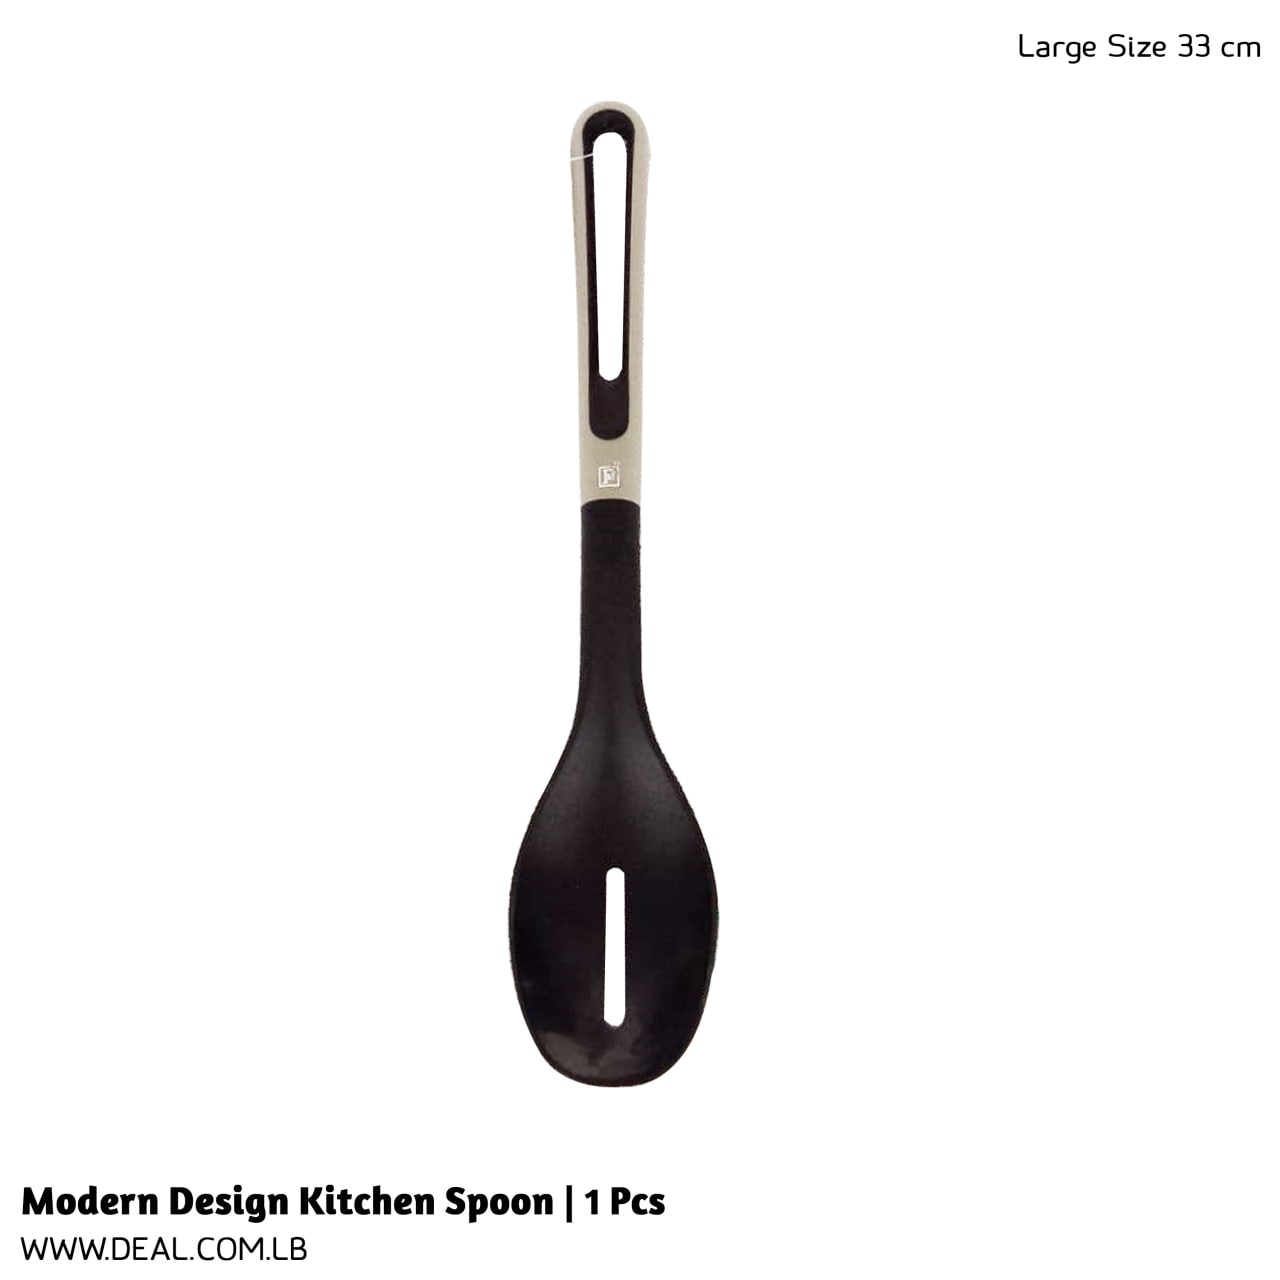 Modern+Design+Kitchen+Spoon+%7C+1+Pcs+%7C+33cm